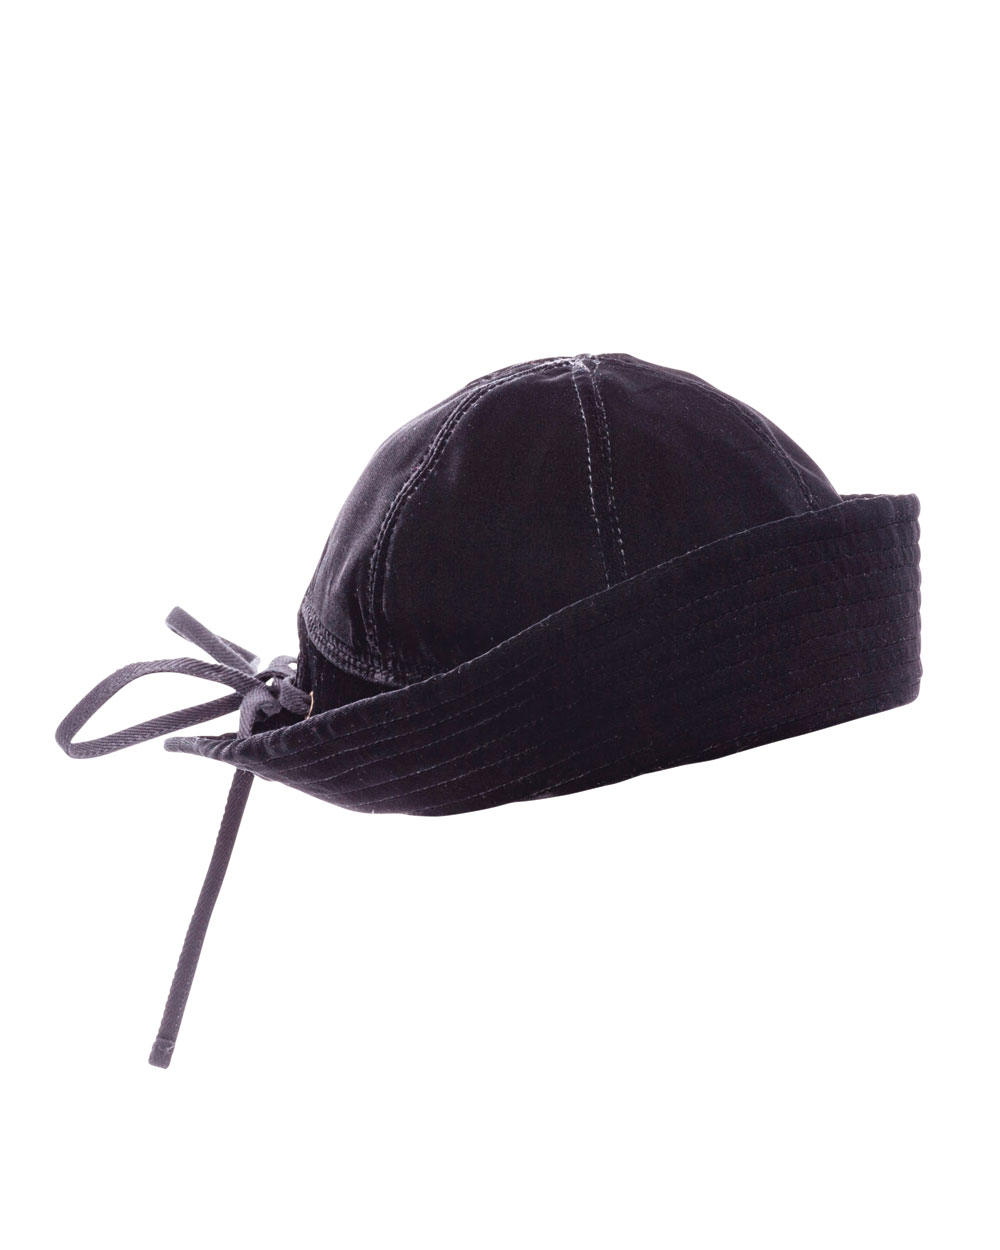 Prada hat, $610